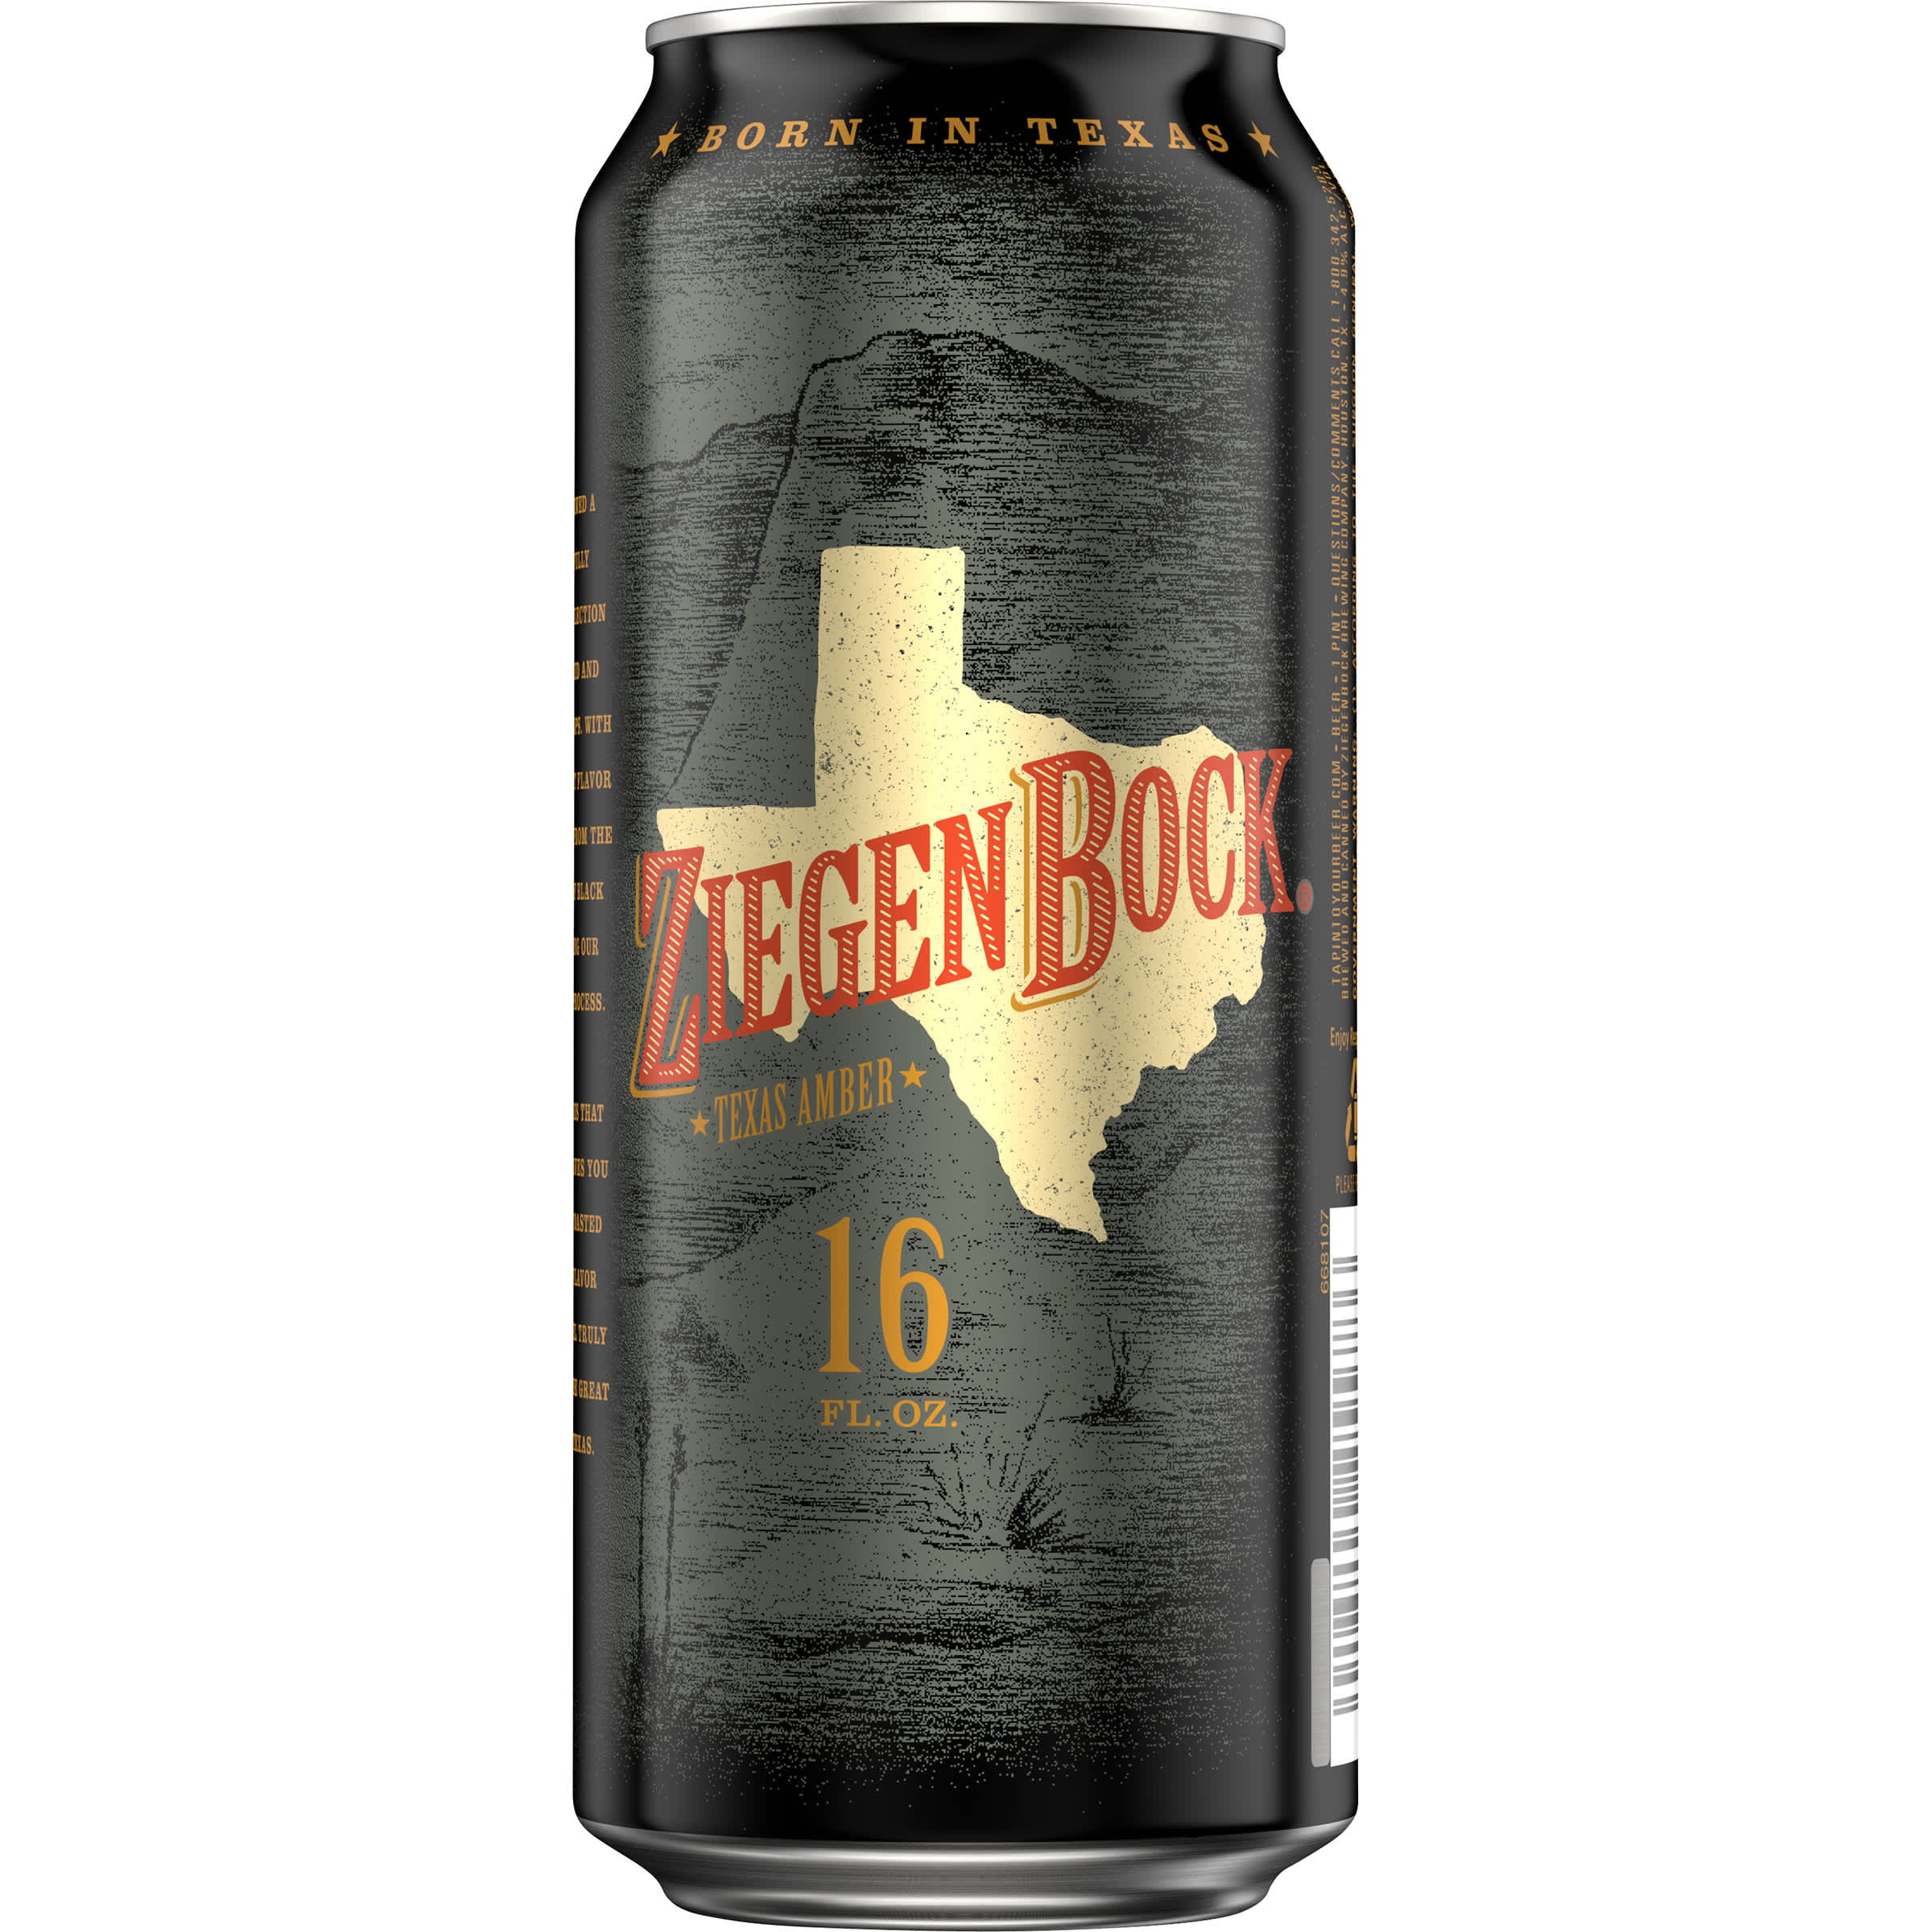 Ziegen Bock Texas Amber Beer Mug Austoberfest Gemutlichkeit 5 5/8" Tall 